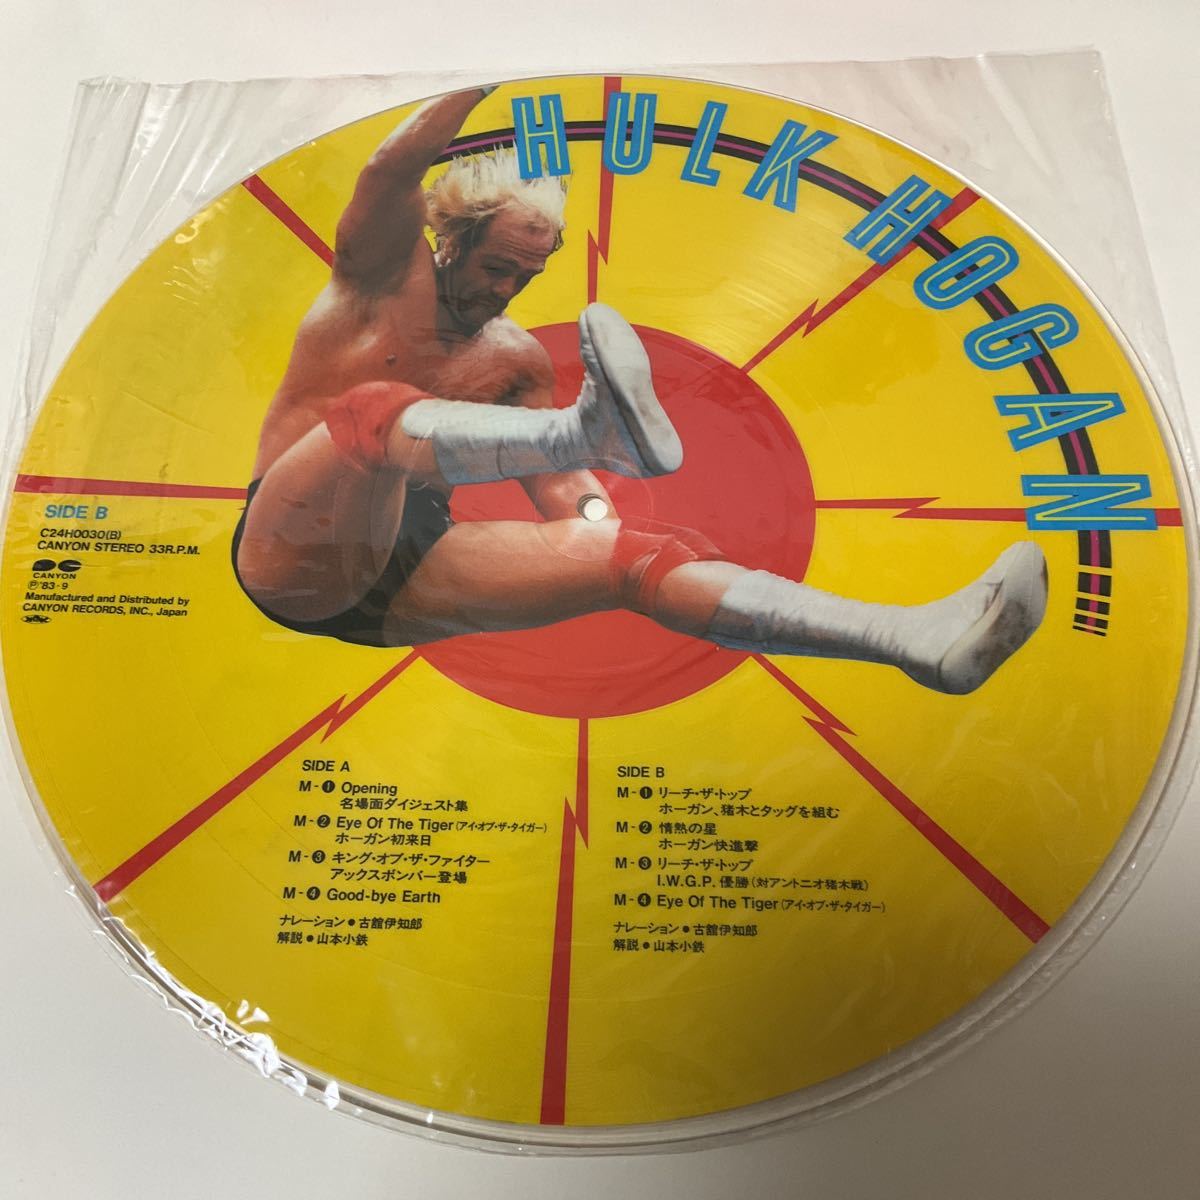 Hulk Hoganレコード / ピクチャー盤-